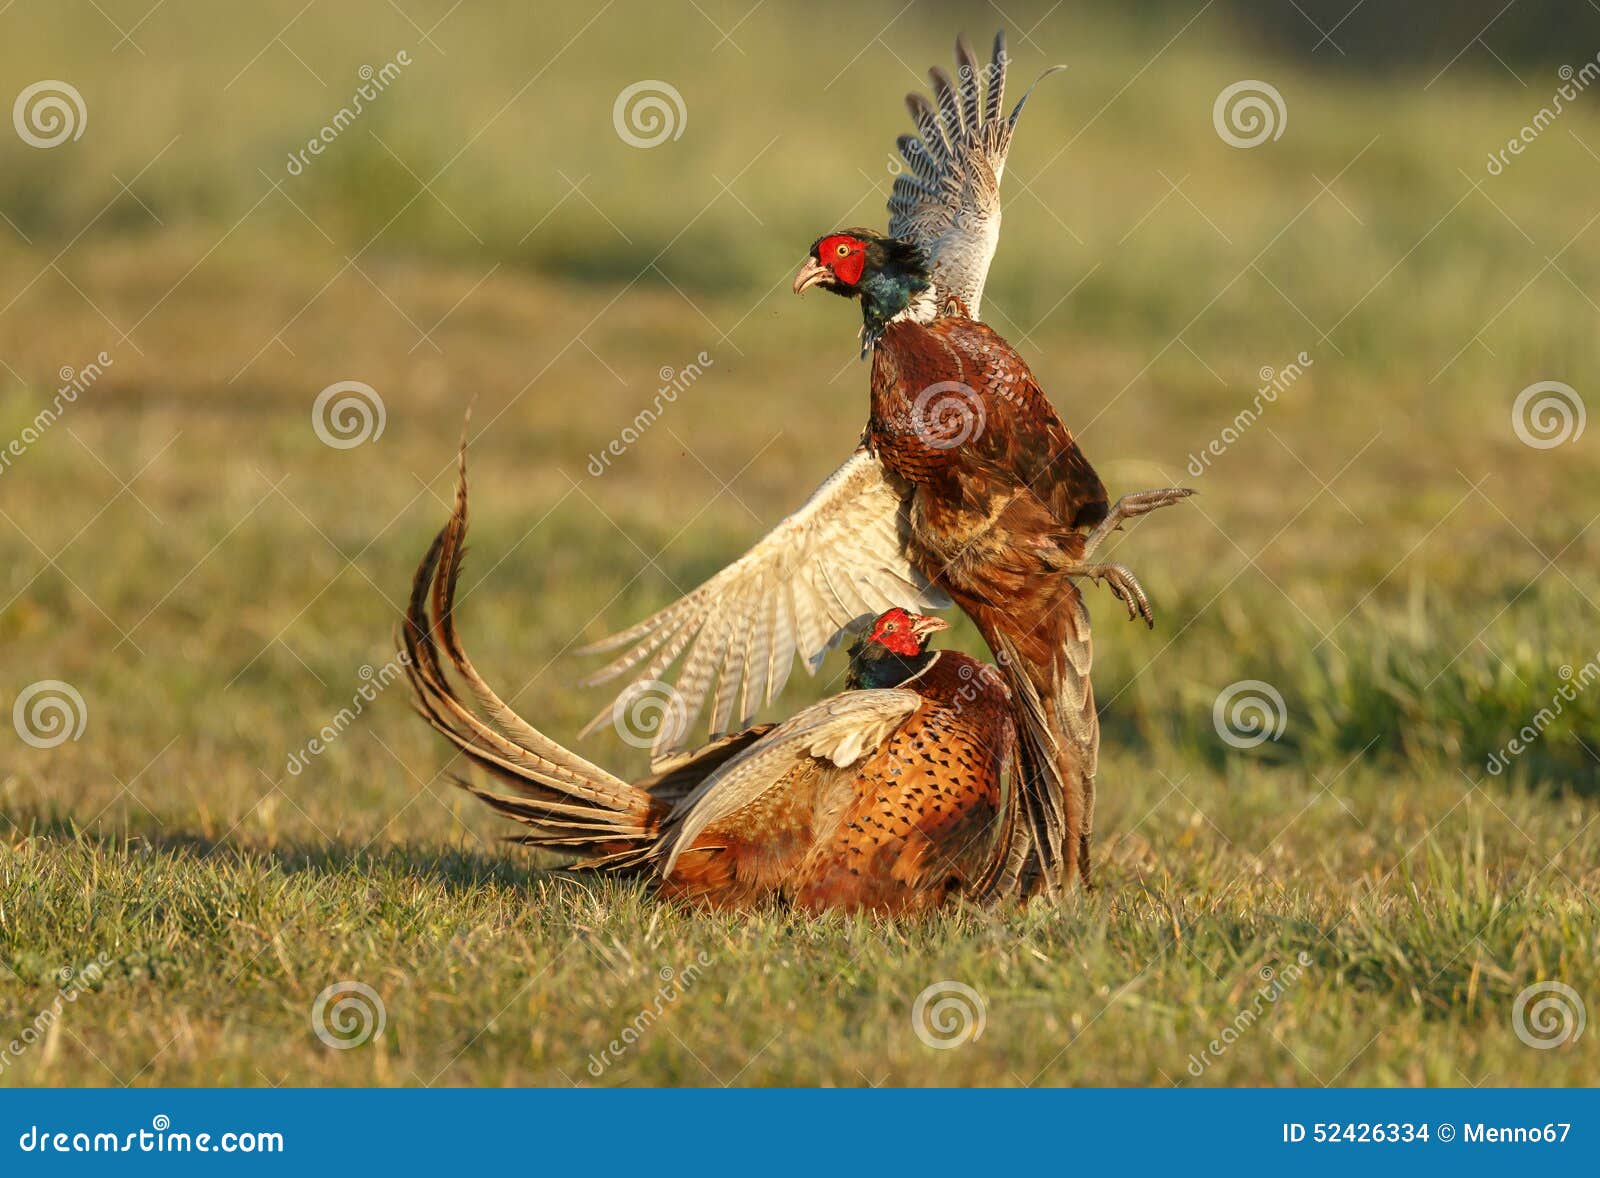 pheasant fighting